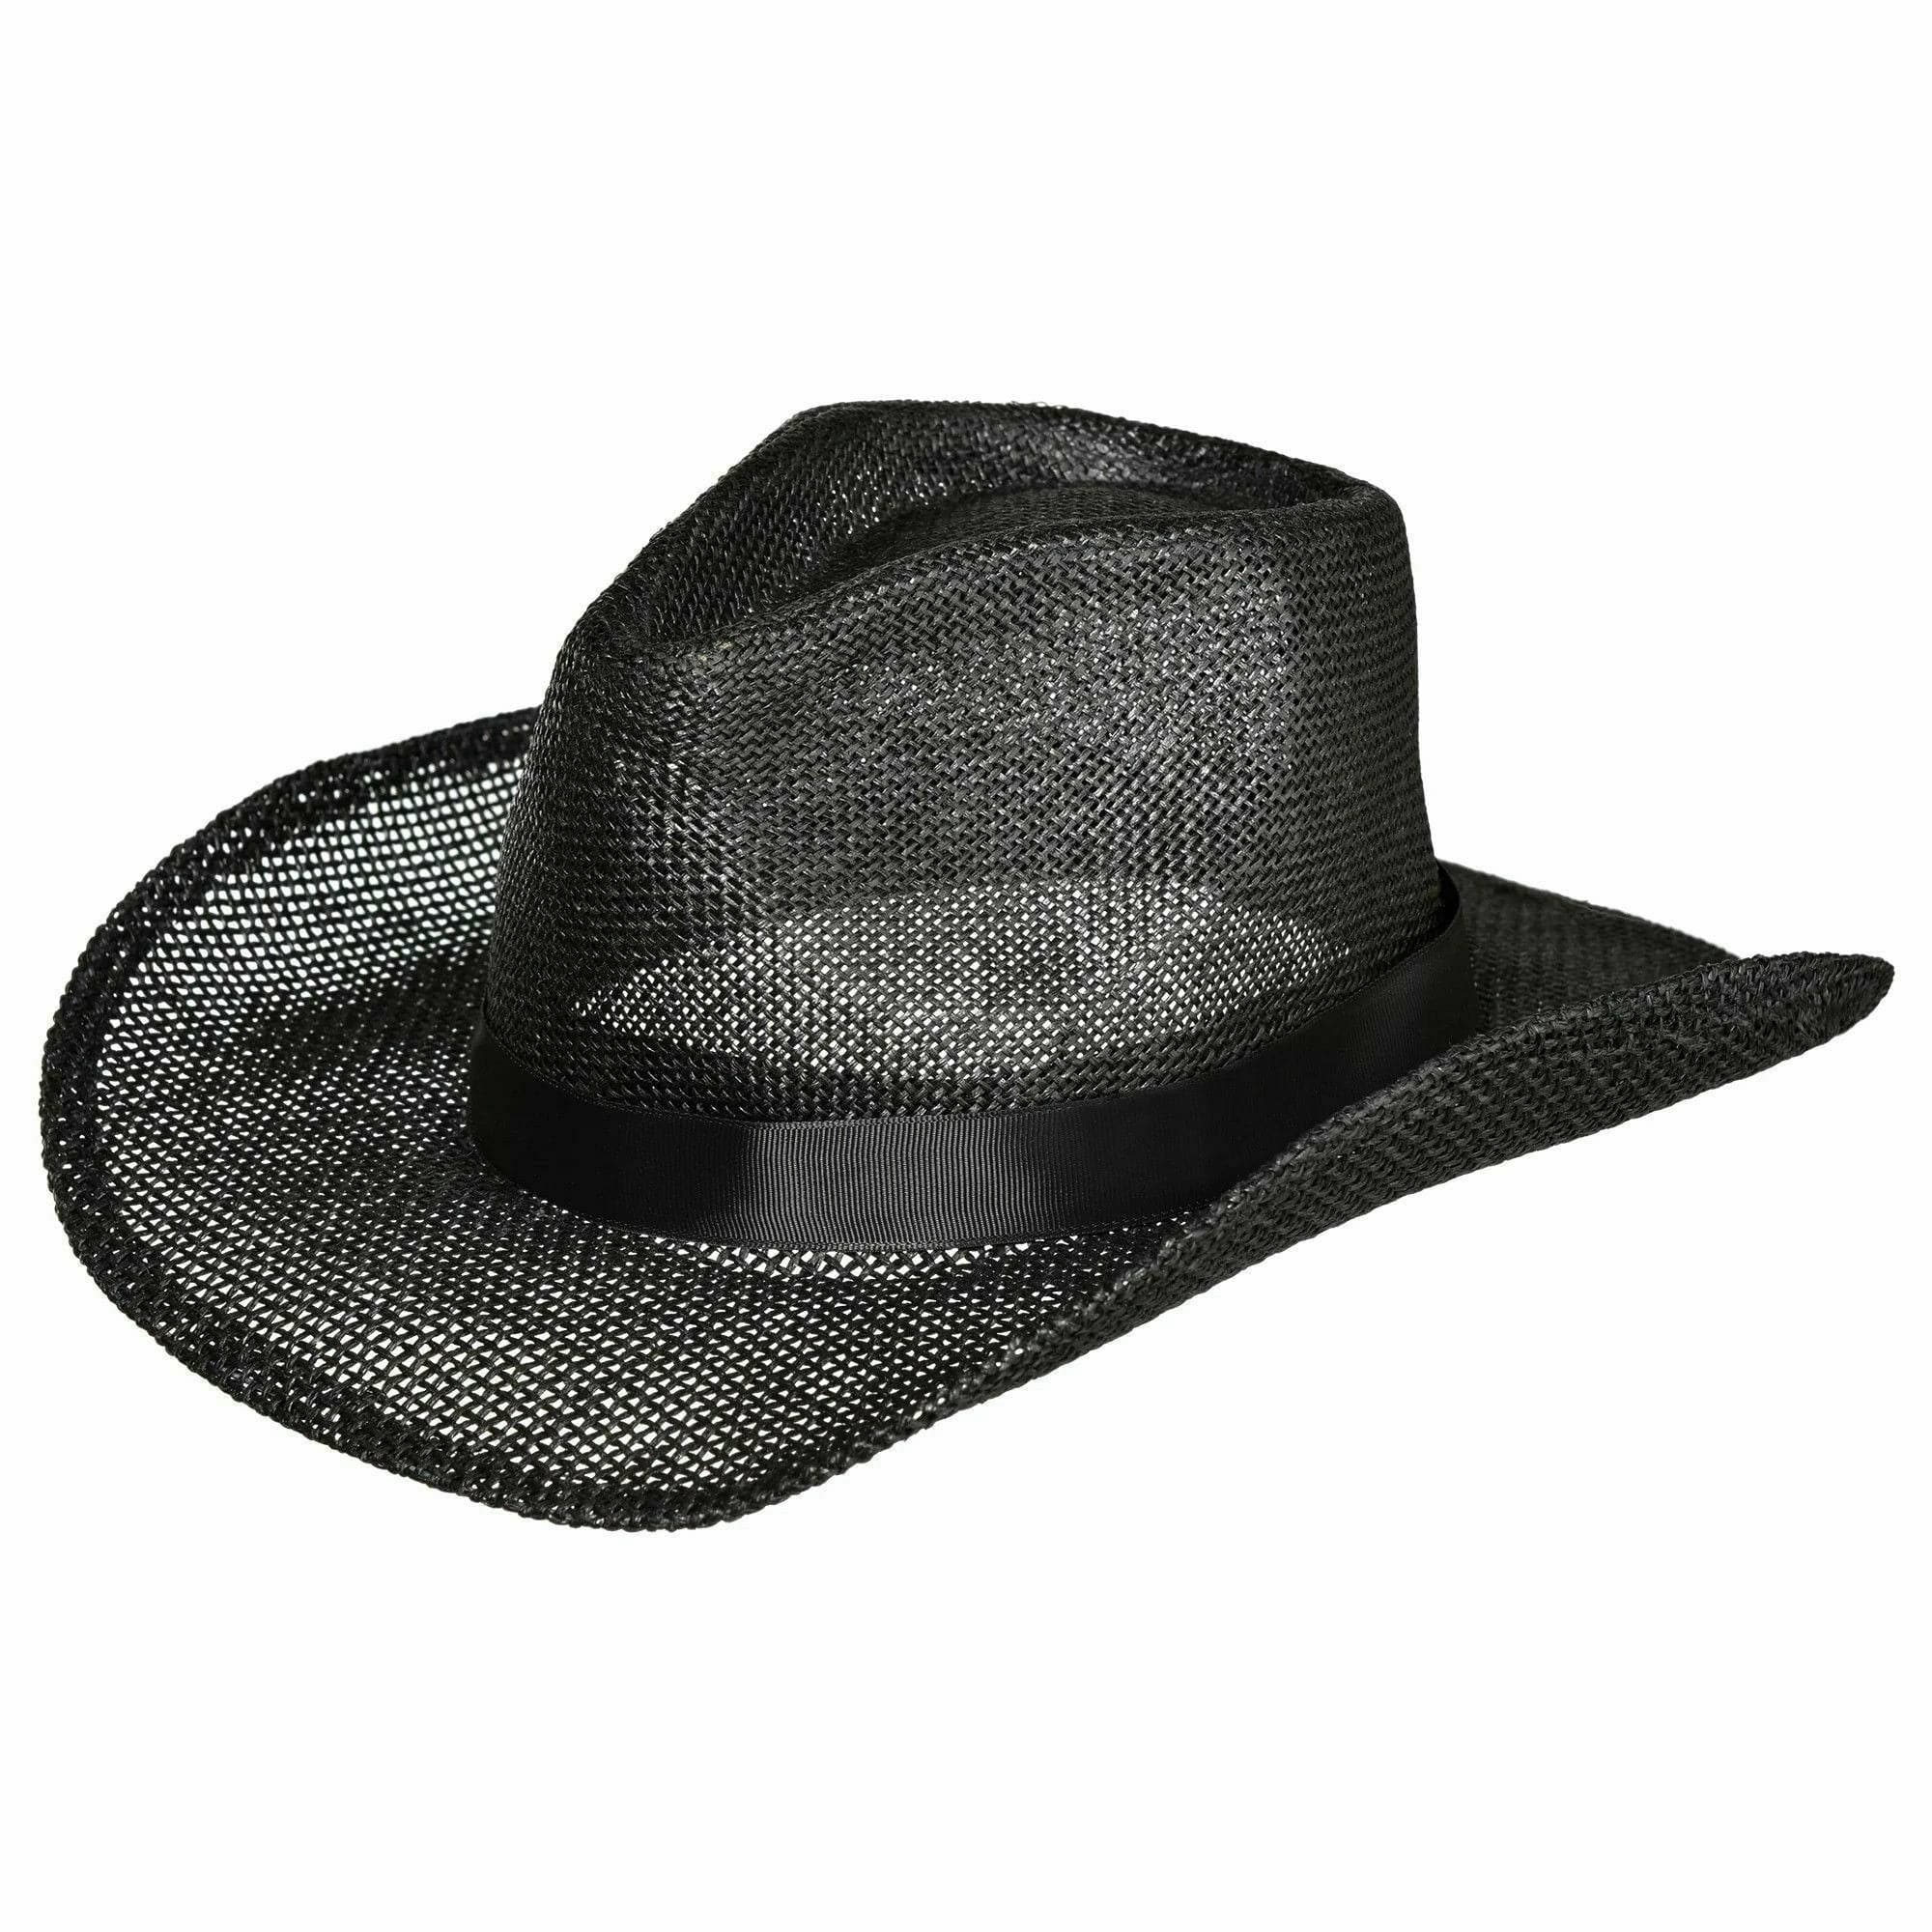 Amscan COSTUMES: HATS Black Straw Cowboy Hats - Assorted Colors